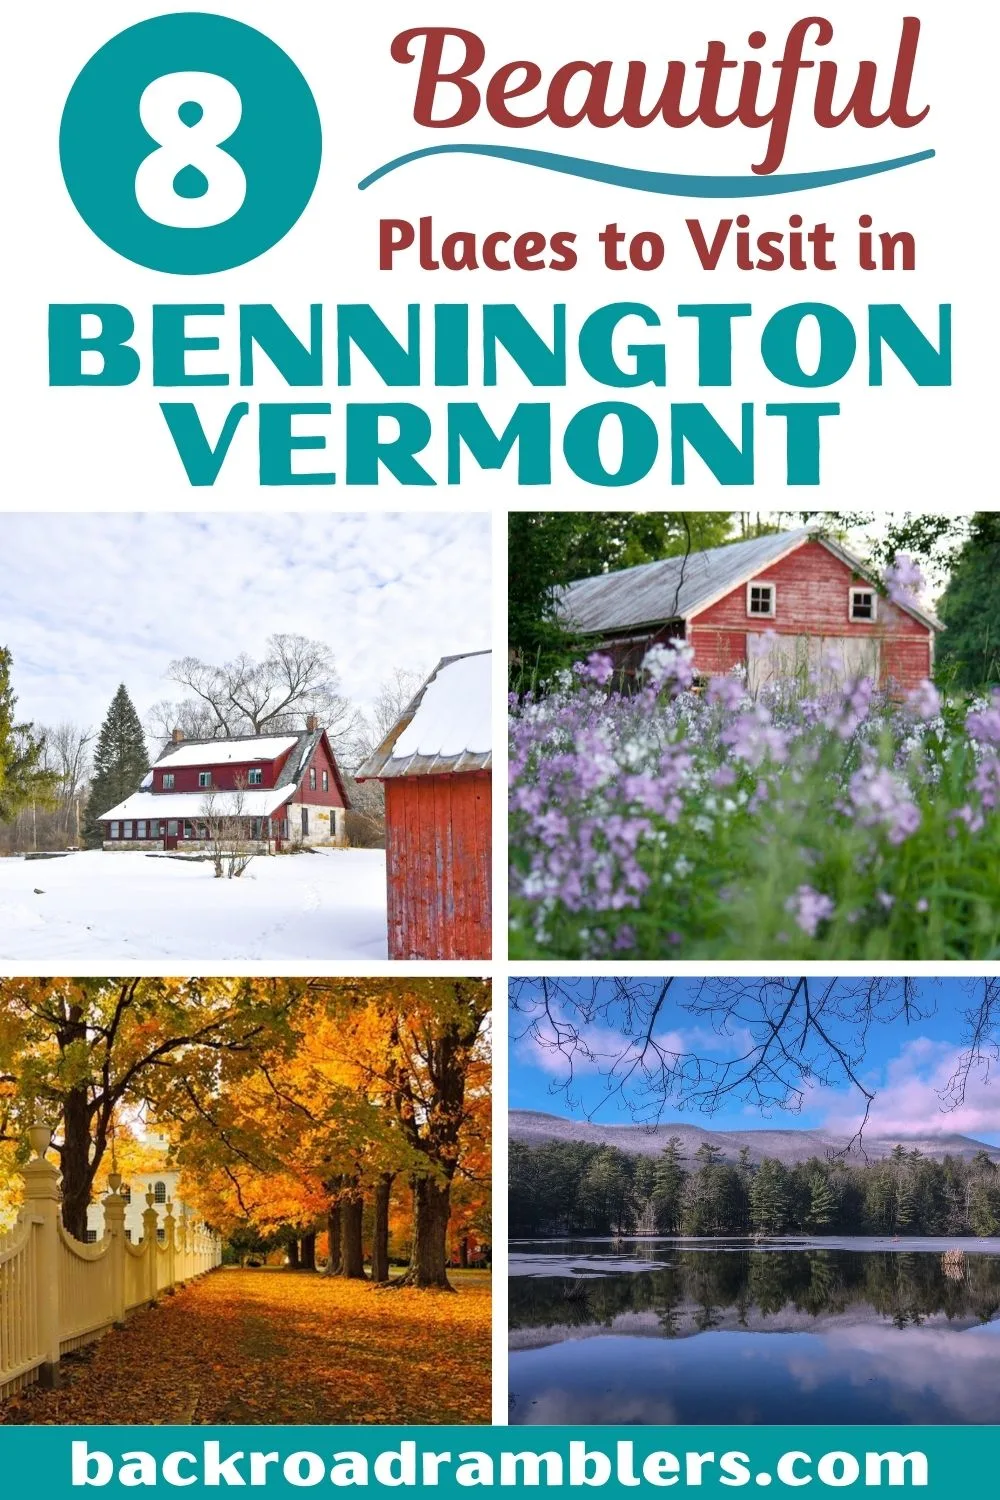 A collage of photos featuring beautiful Bennington Vermont.